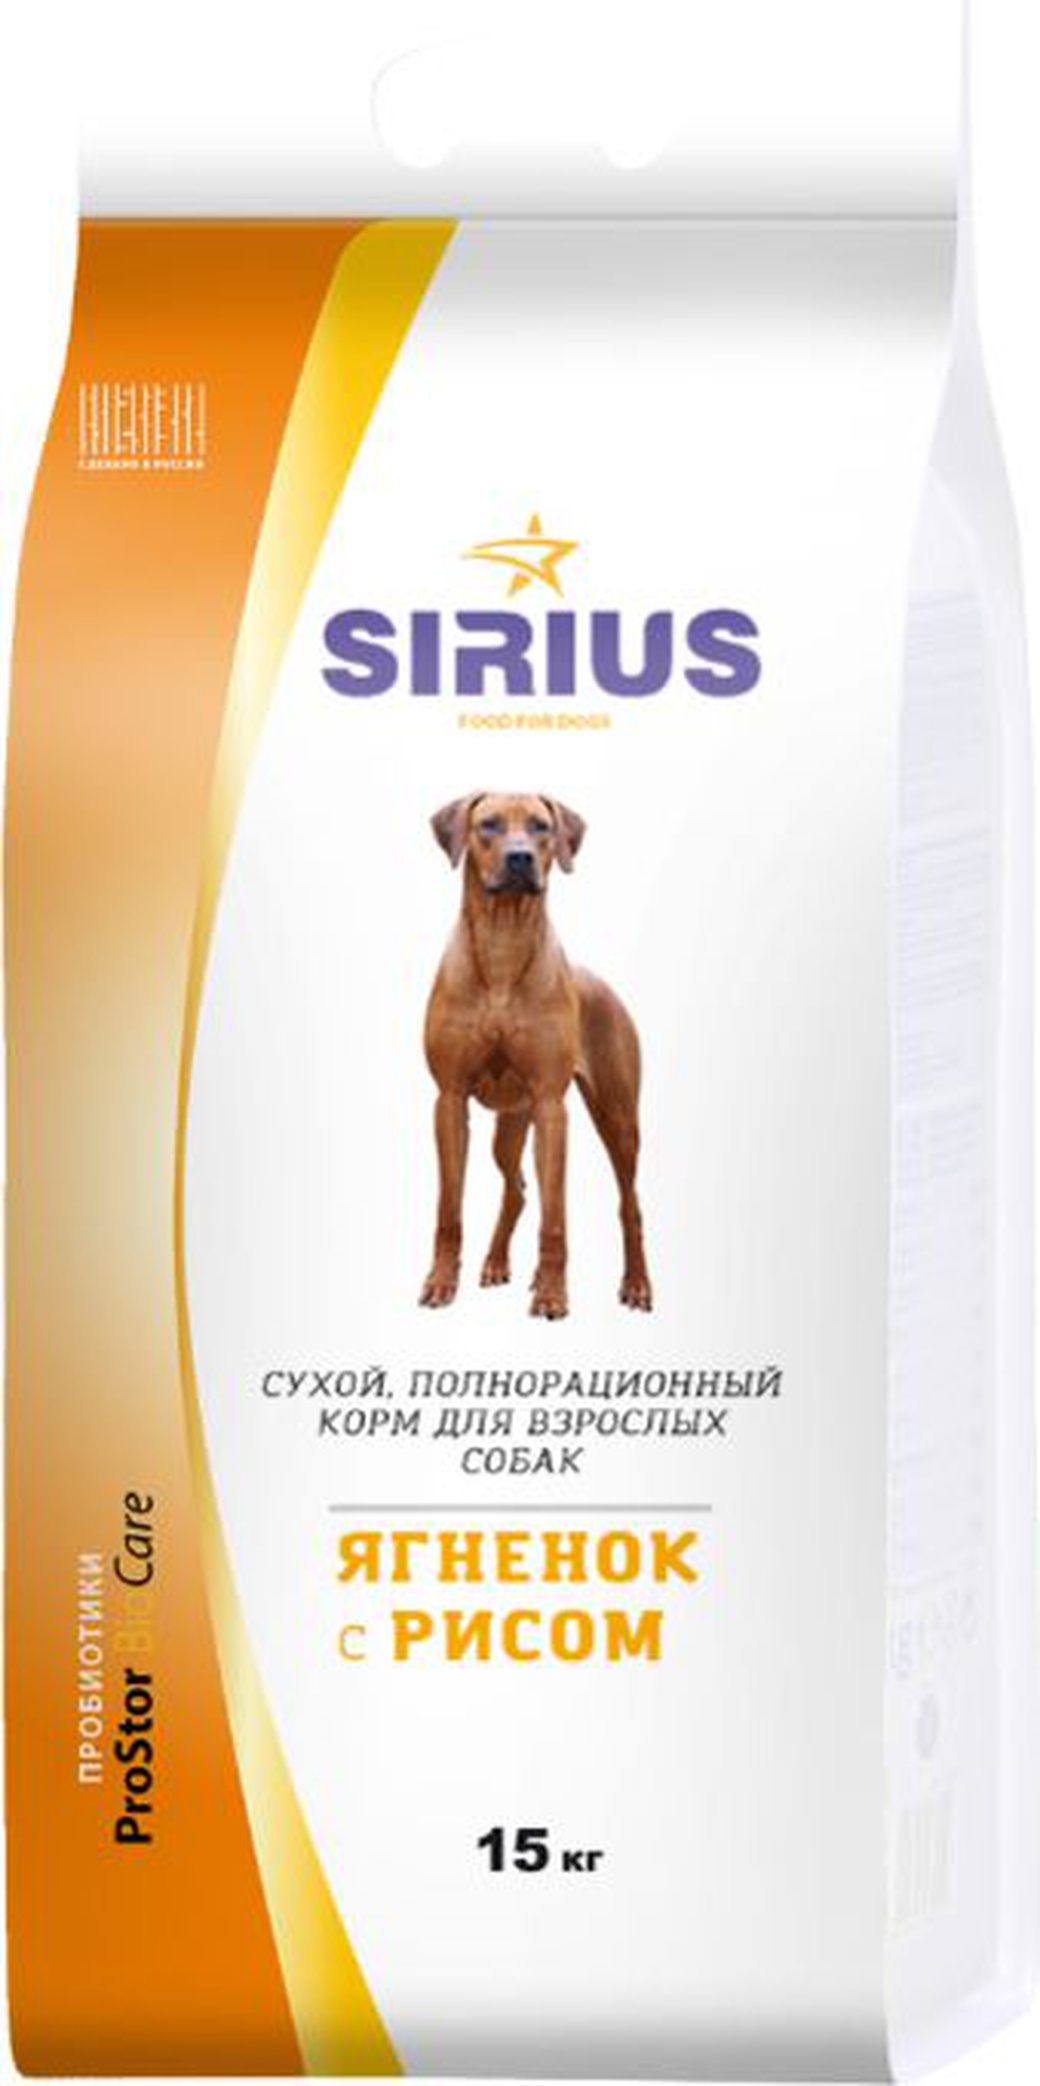 SIRIUS Сухой корм для взрослых собак Ягнёнок и рис, 15 кг фото